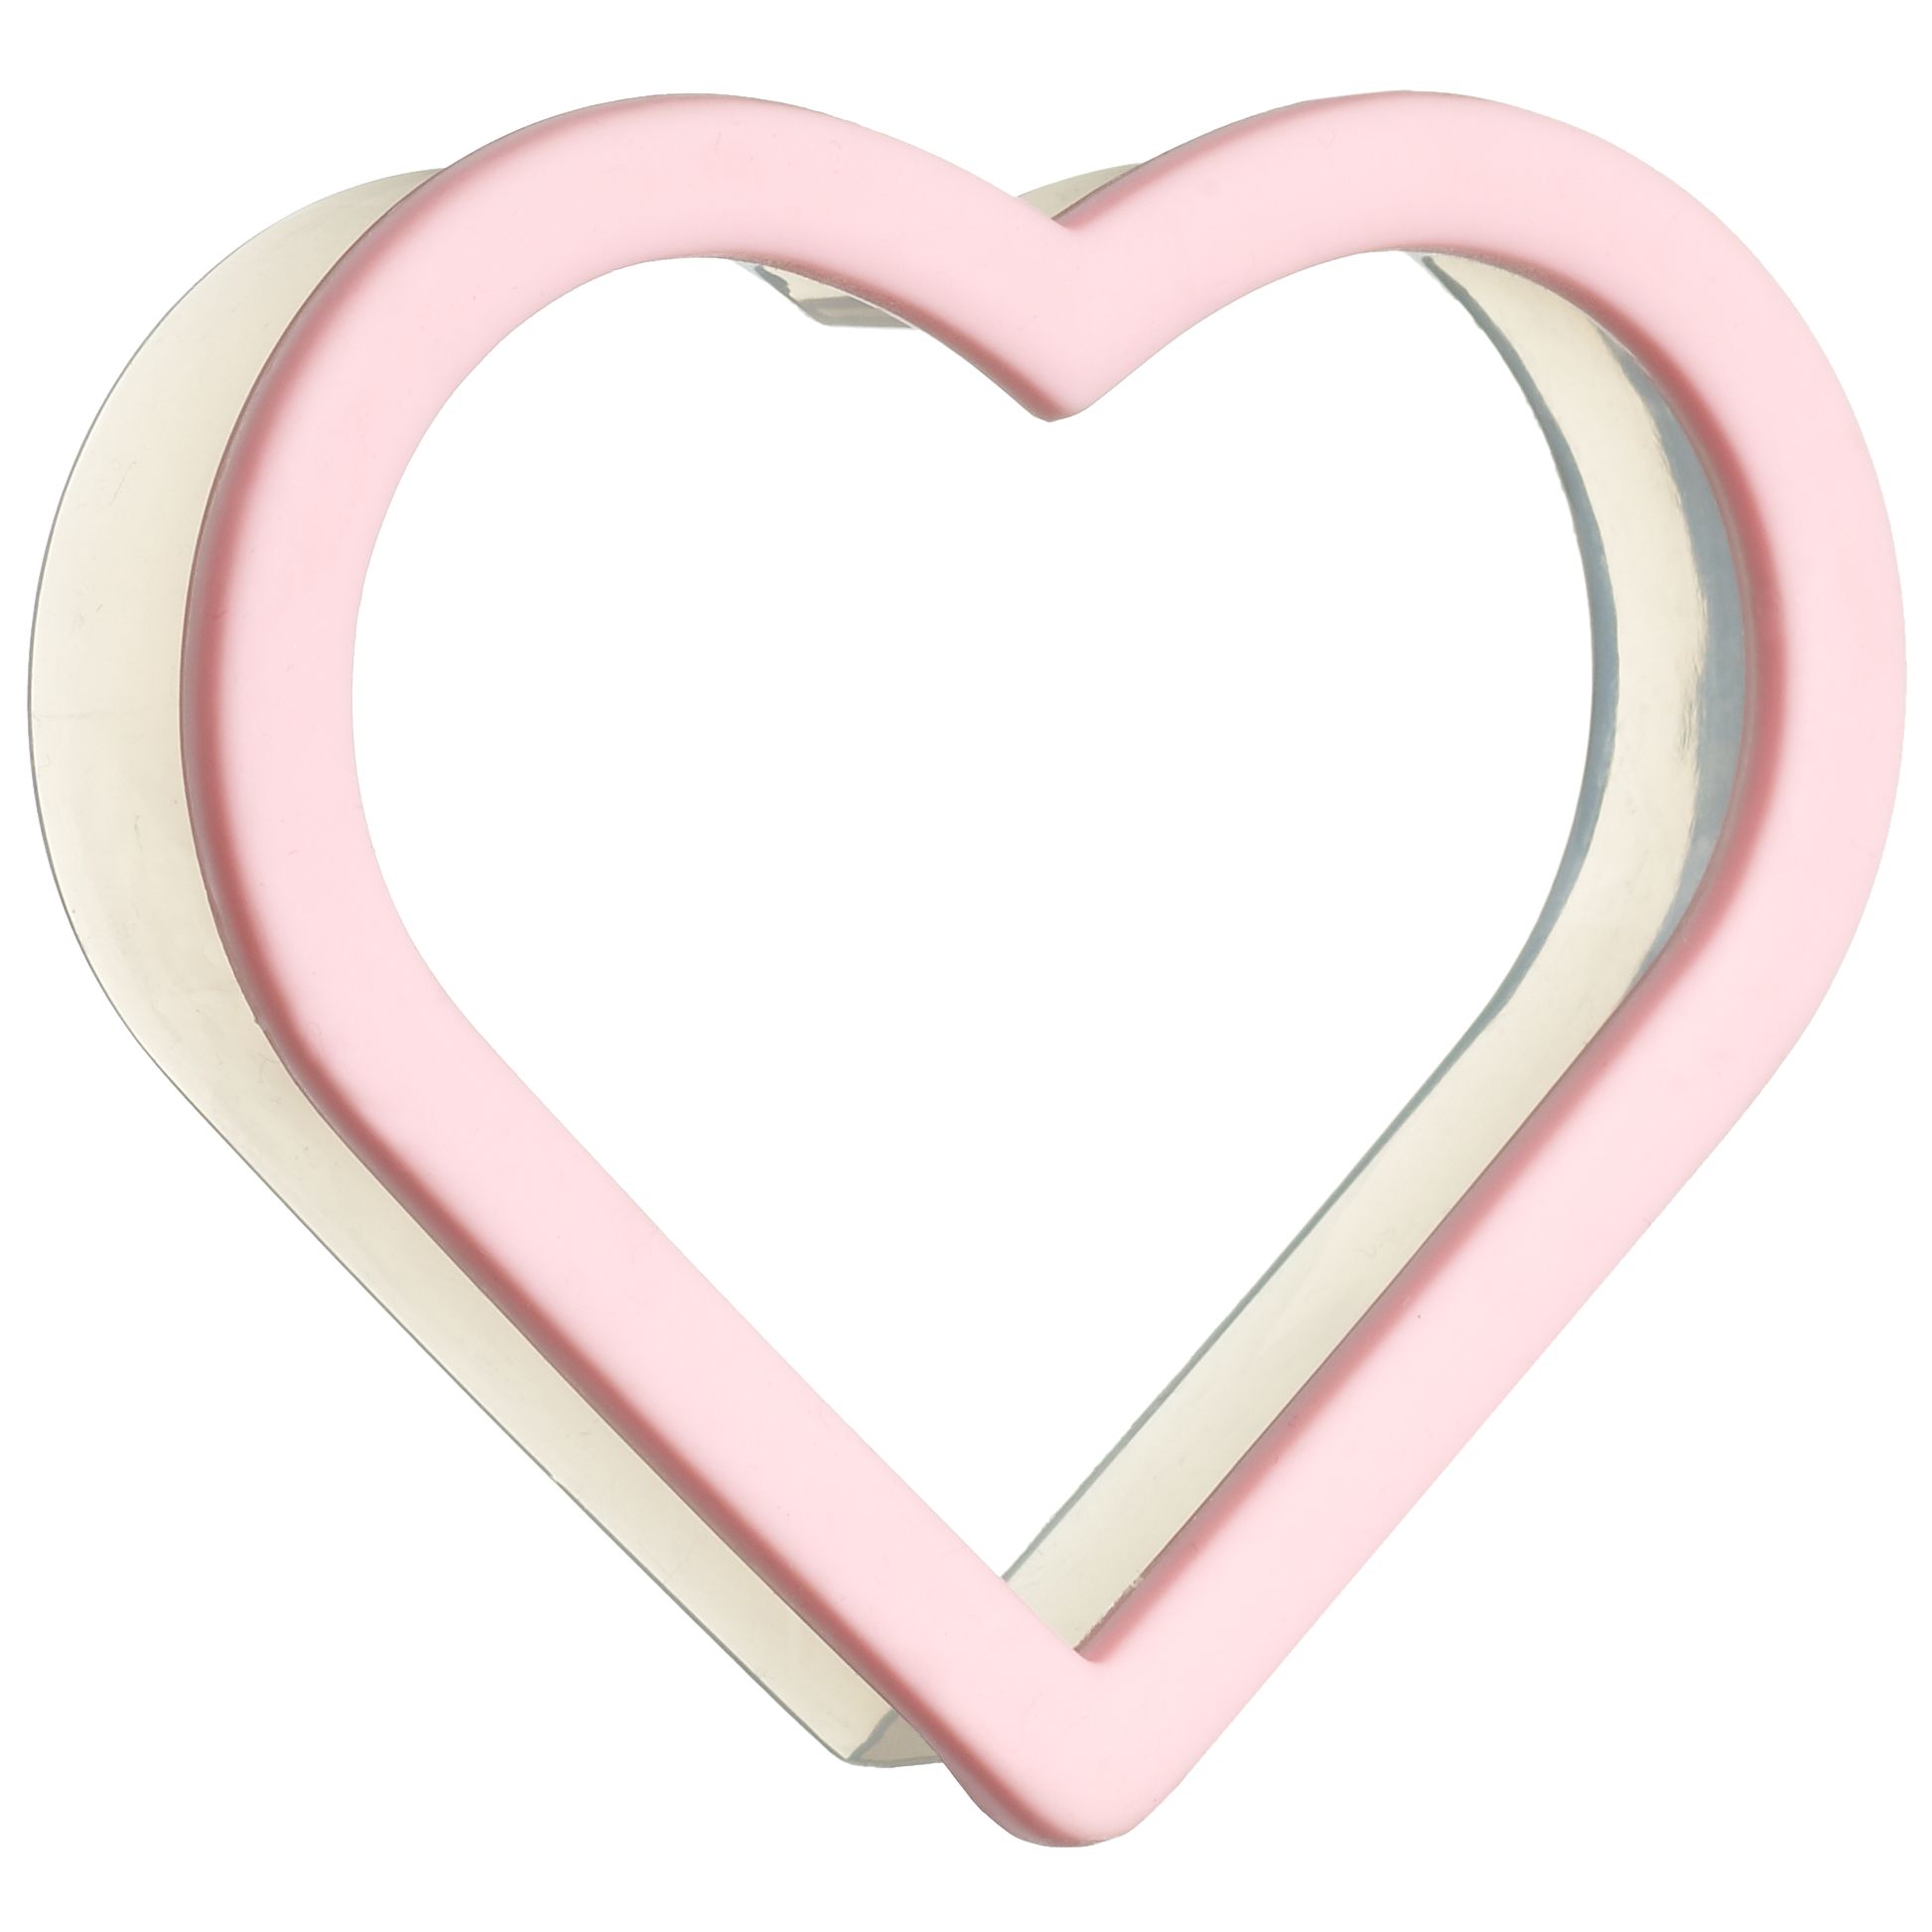 John Lewis Heart Shaped Cookie Cutter, Pink